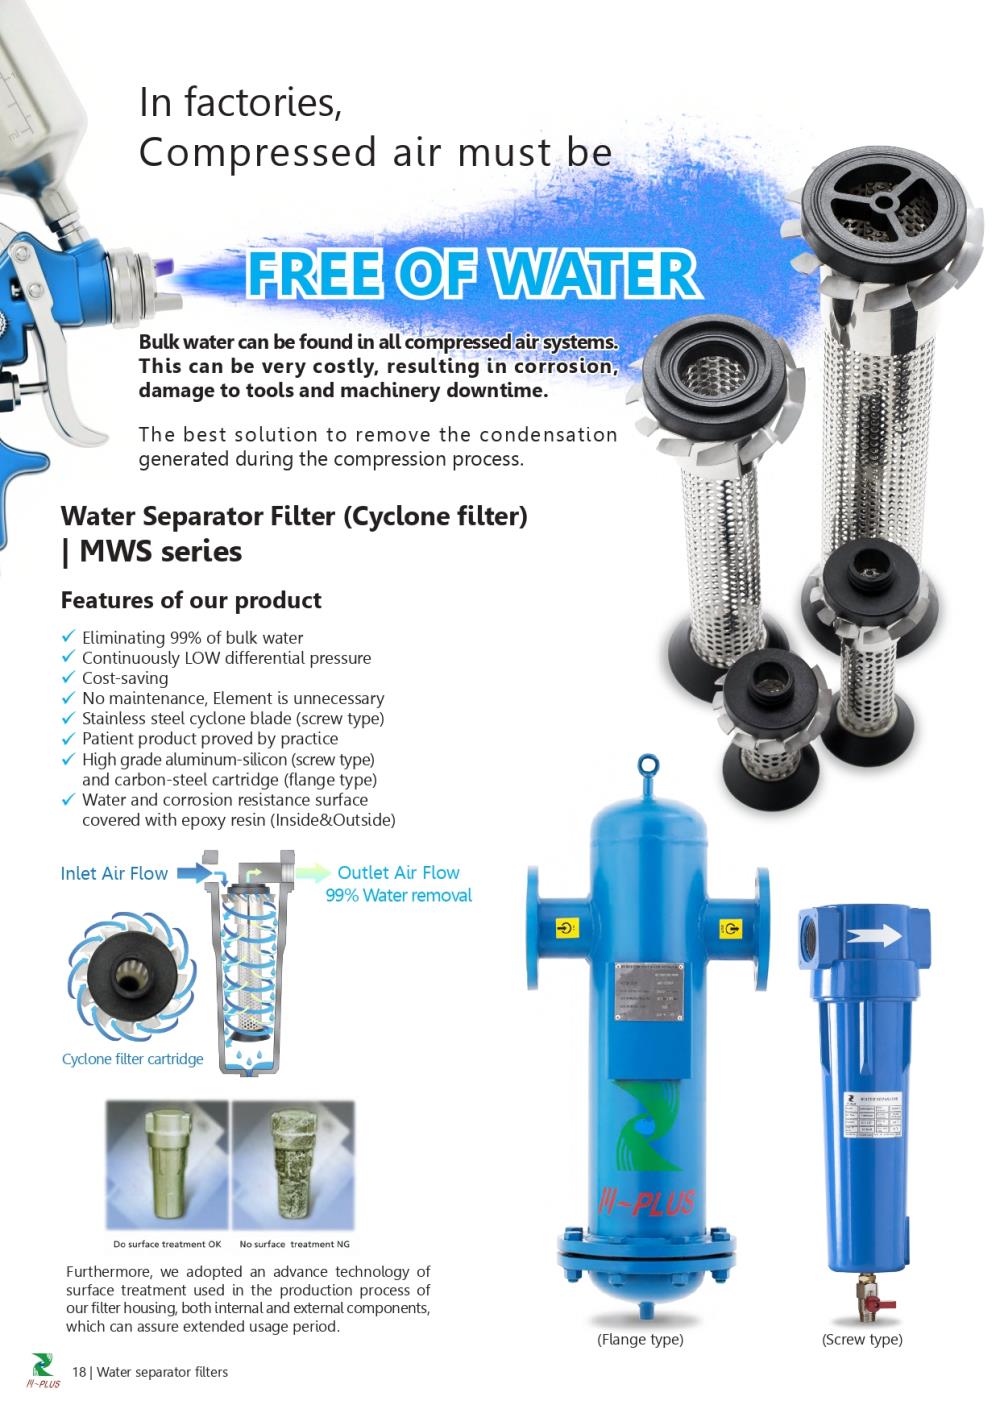 Water Separator Filter (Cyclone Filter) / ชุดกรองดักน้ำจากลมอัด ขนาดตั้งแต่ 102 ถึง 25,920 คิว/ชม.